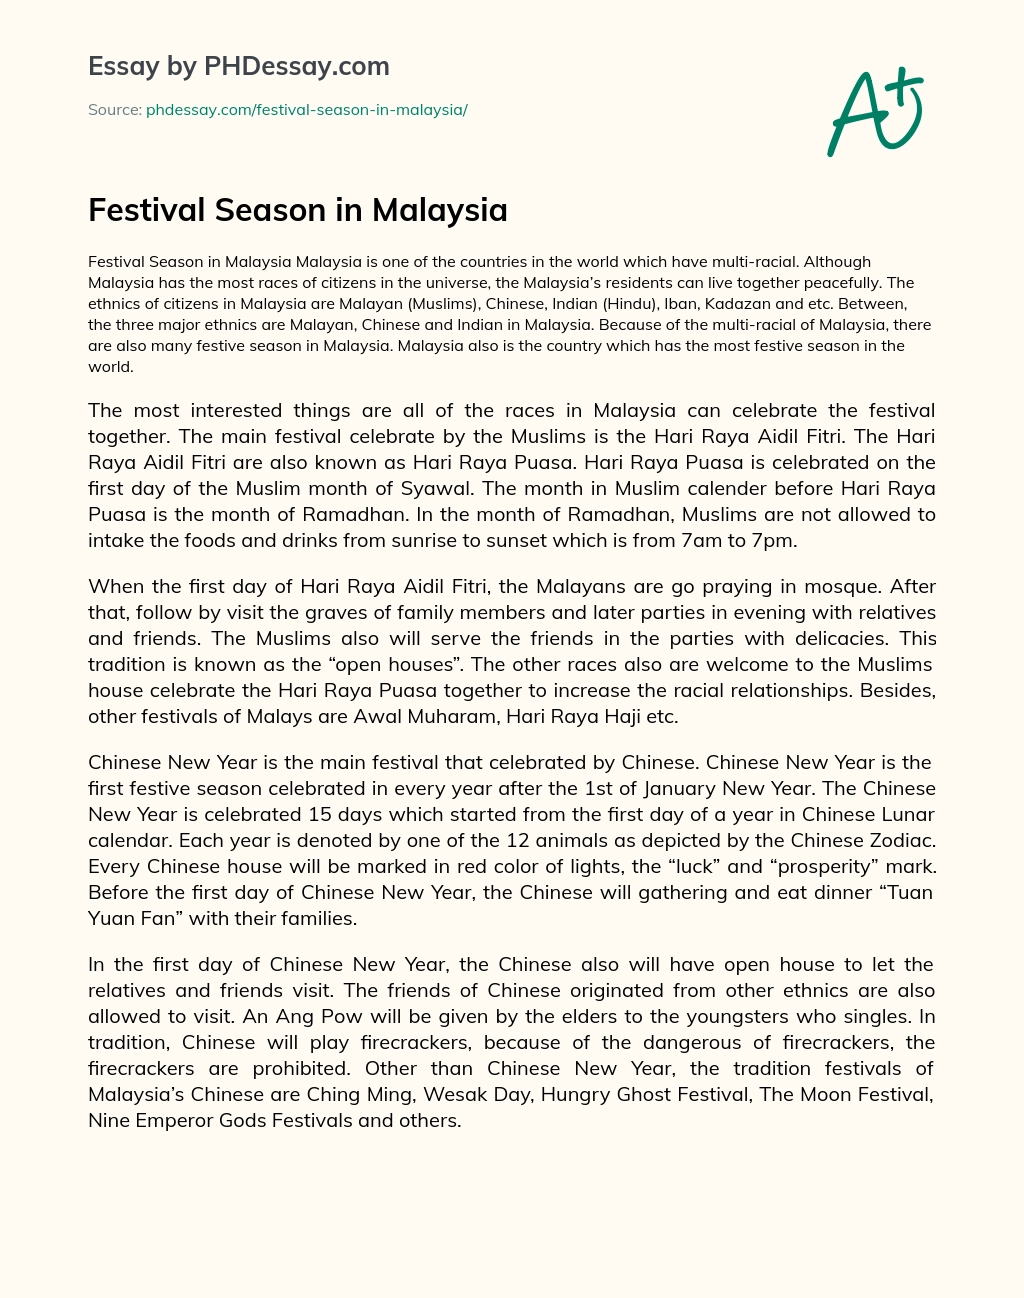 Festival Season in Malaysia essay